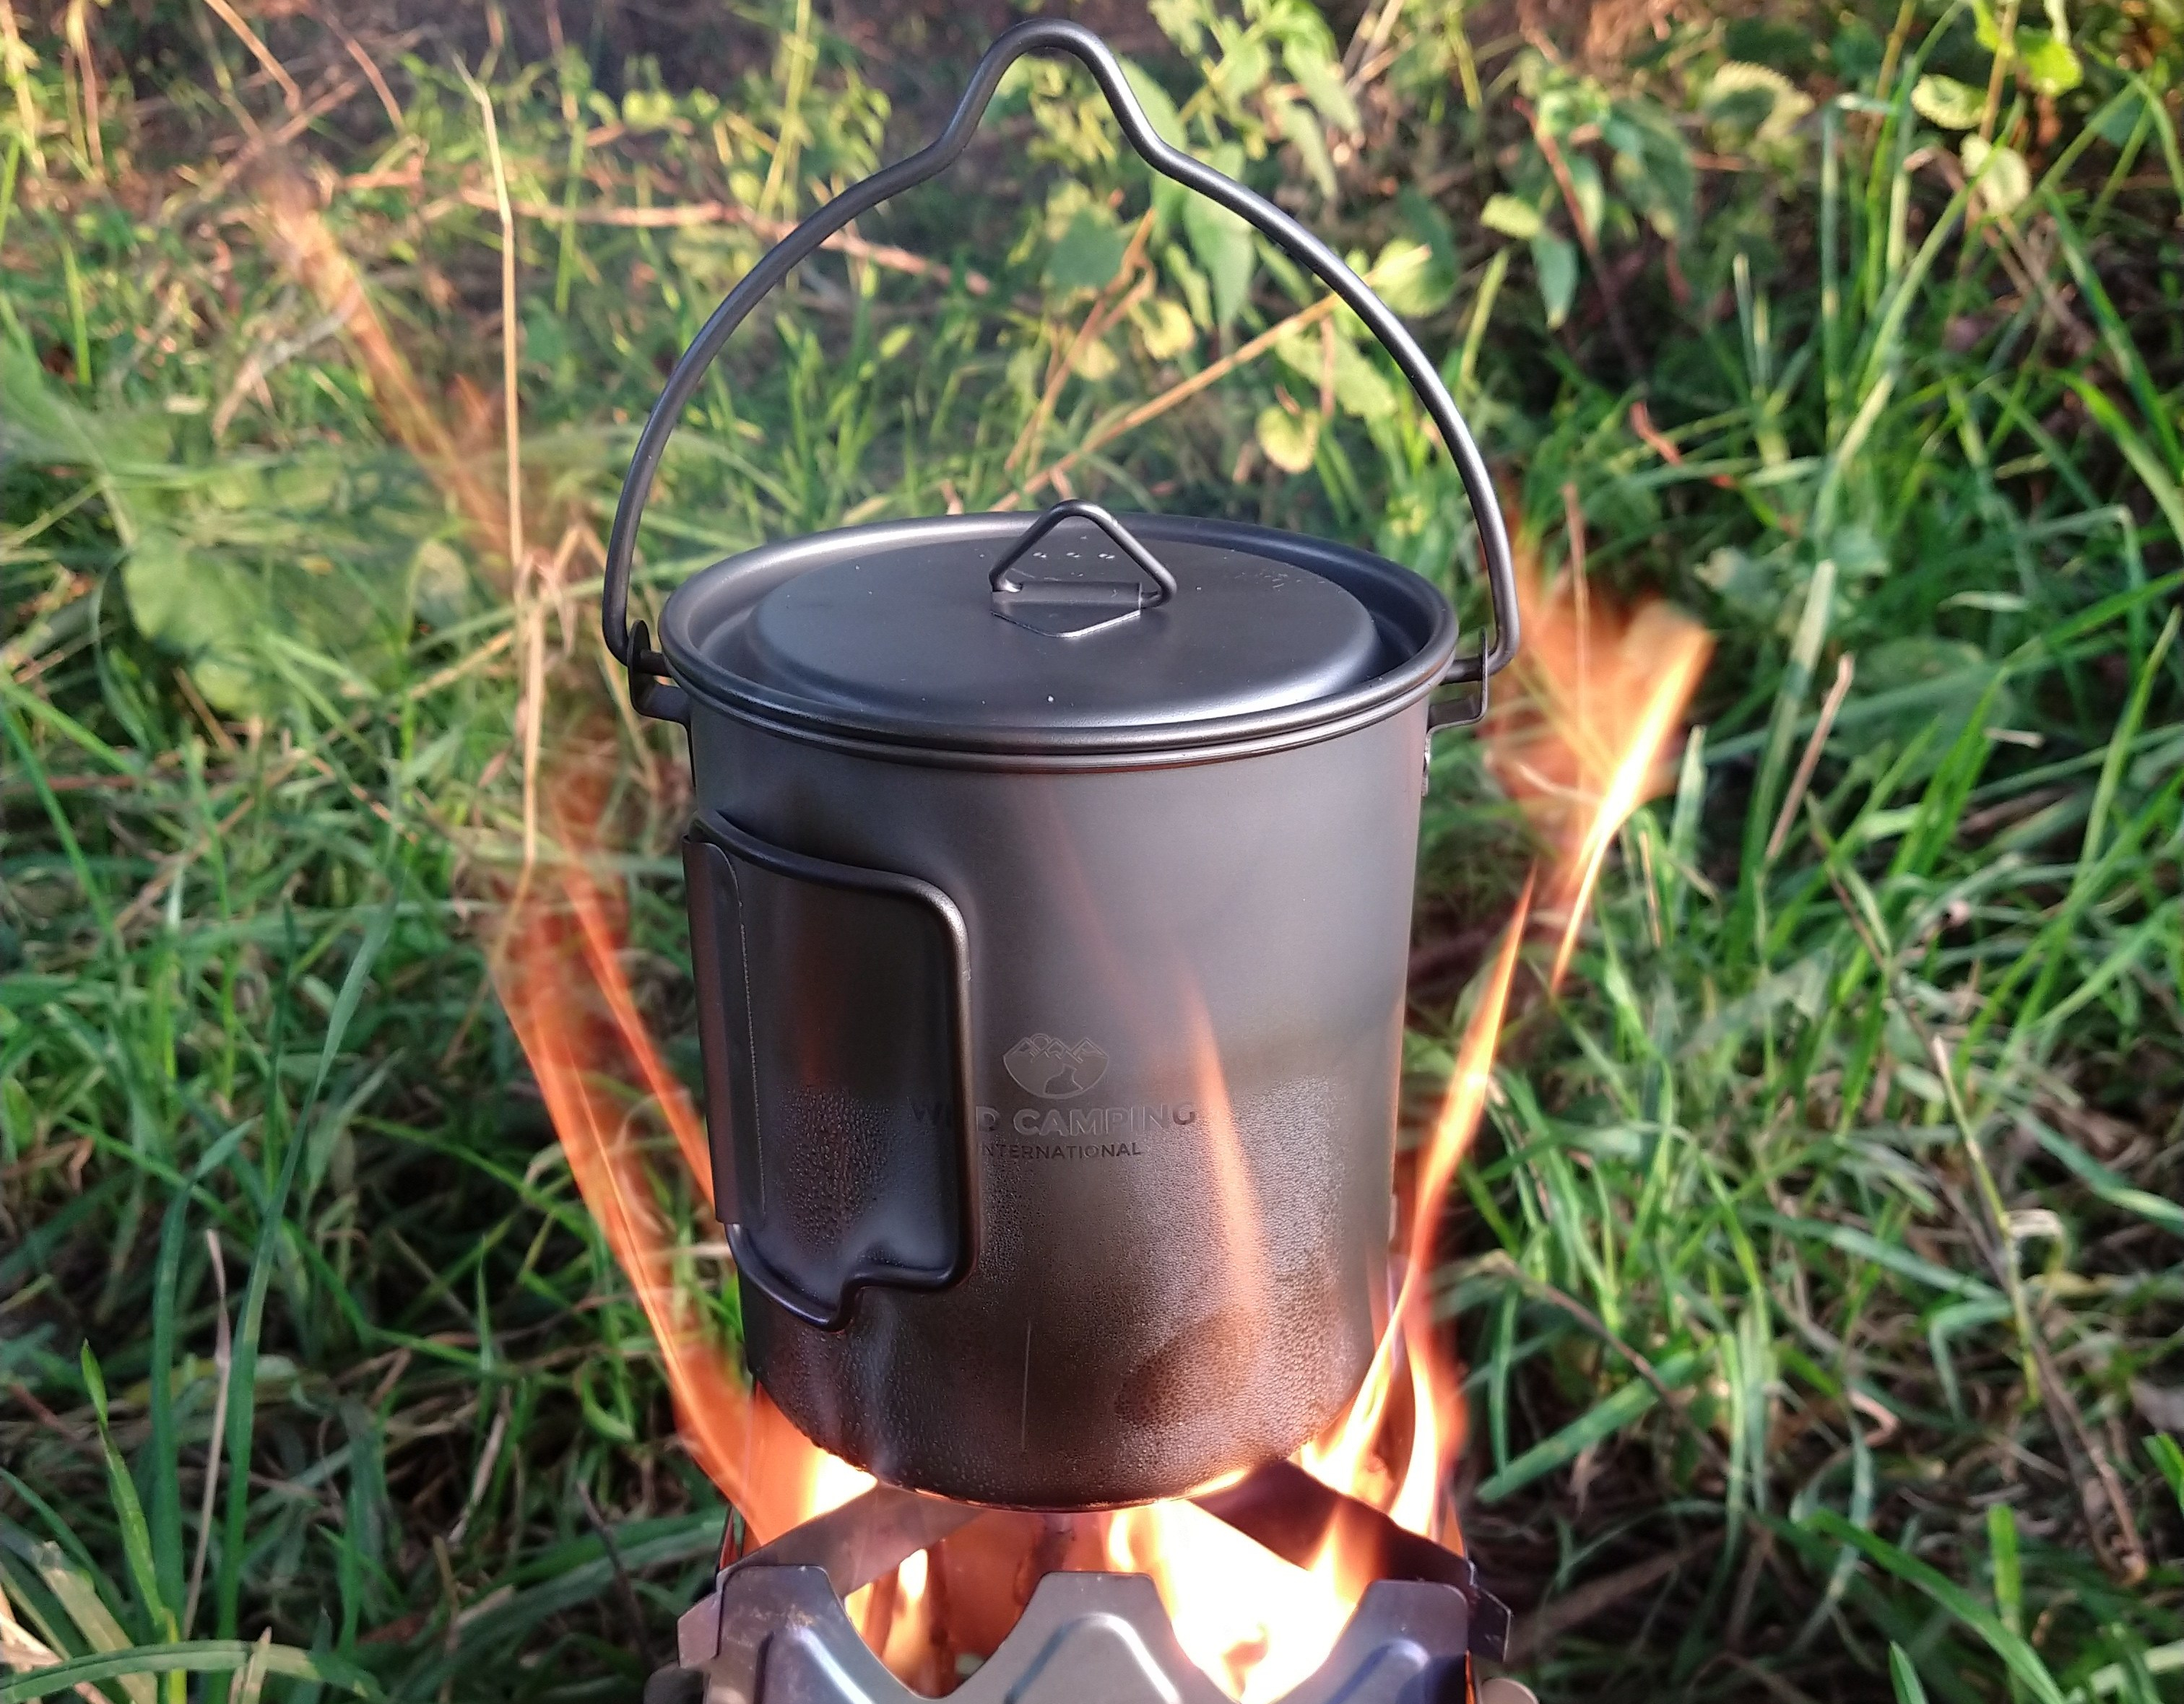 750ml Wild Camping International titanium stove